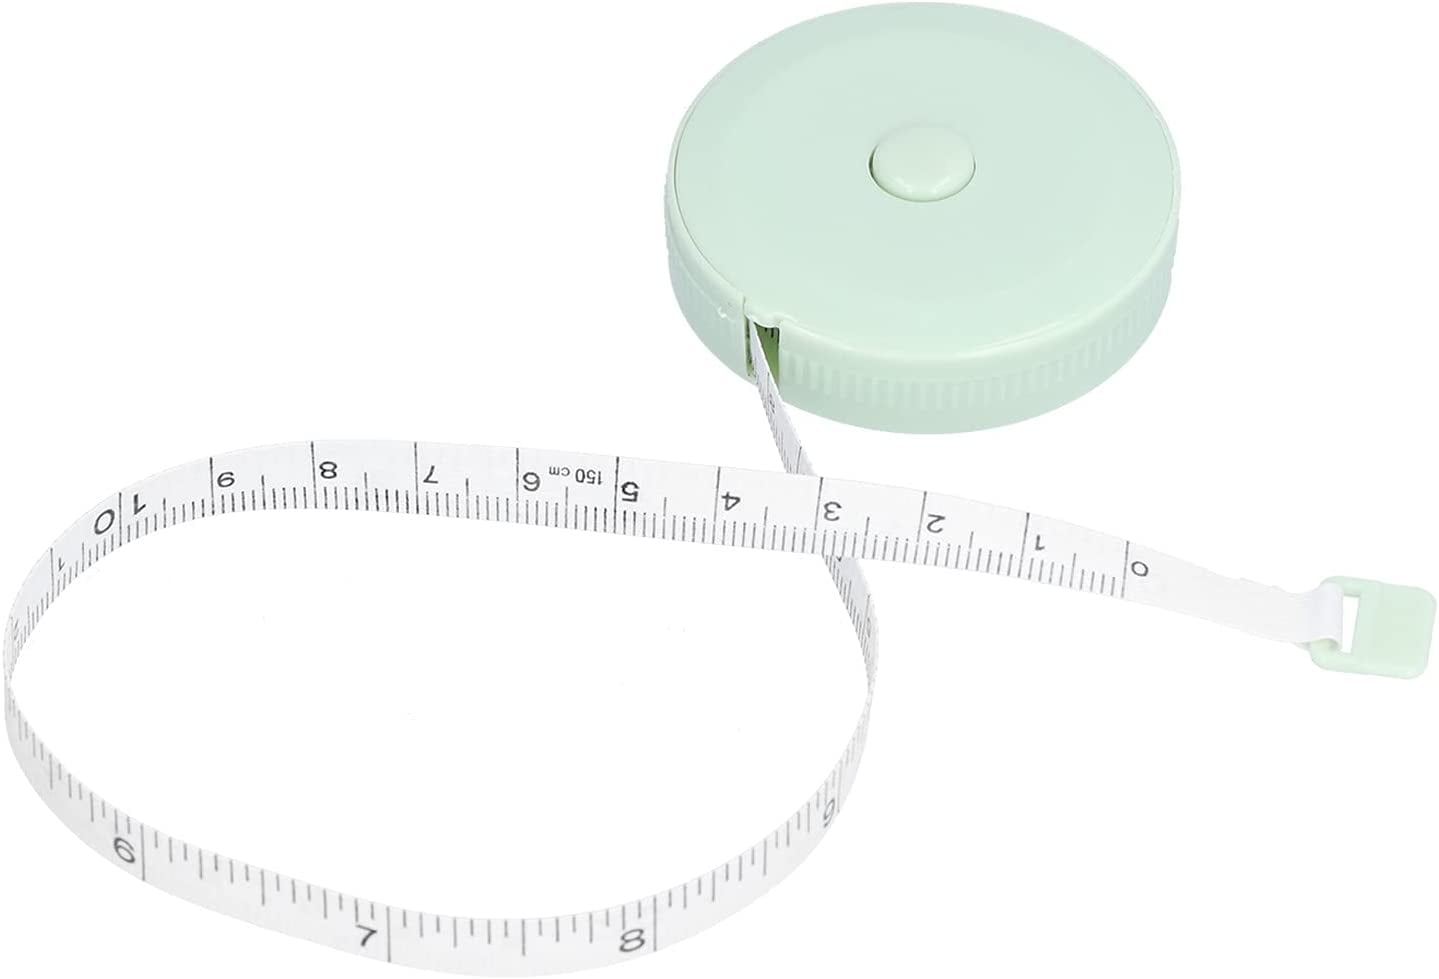 150cm/60cute Rulers Children Height Tape Measure Centimeter Meter Sewing  Measuring Tape Metric Scale Ruler Kawaii Stationery